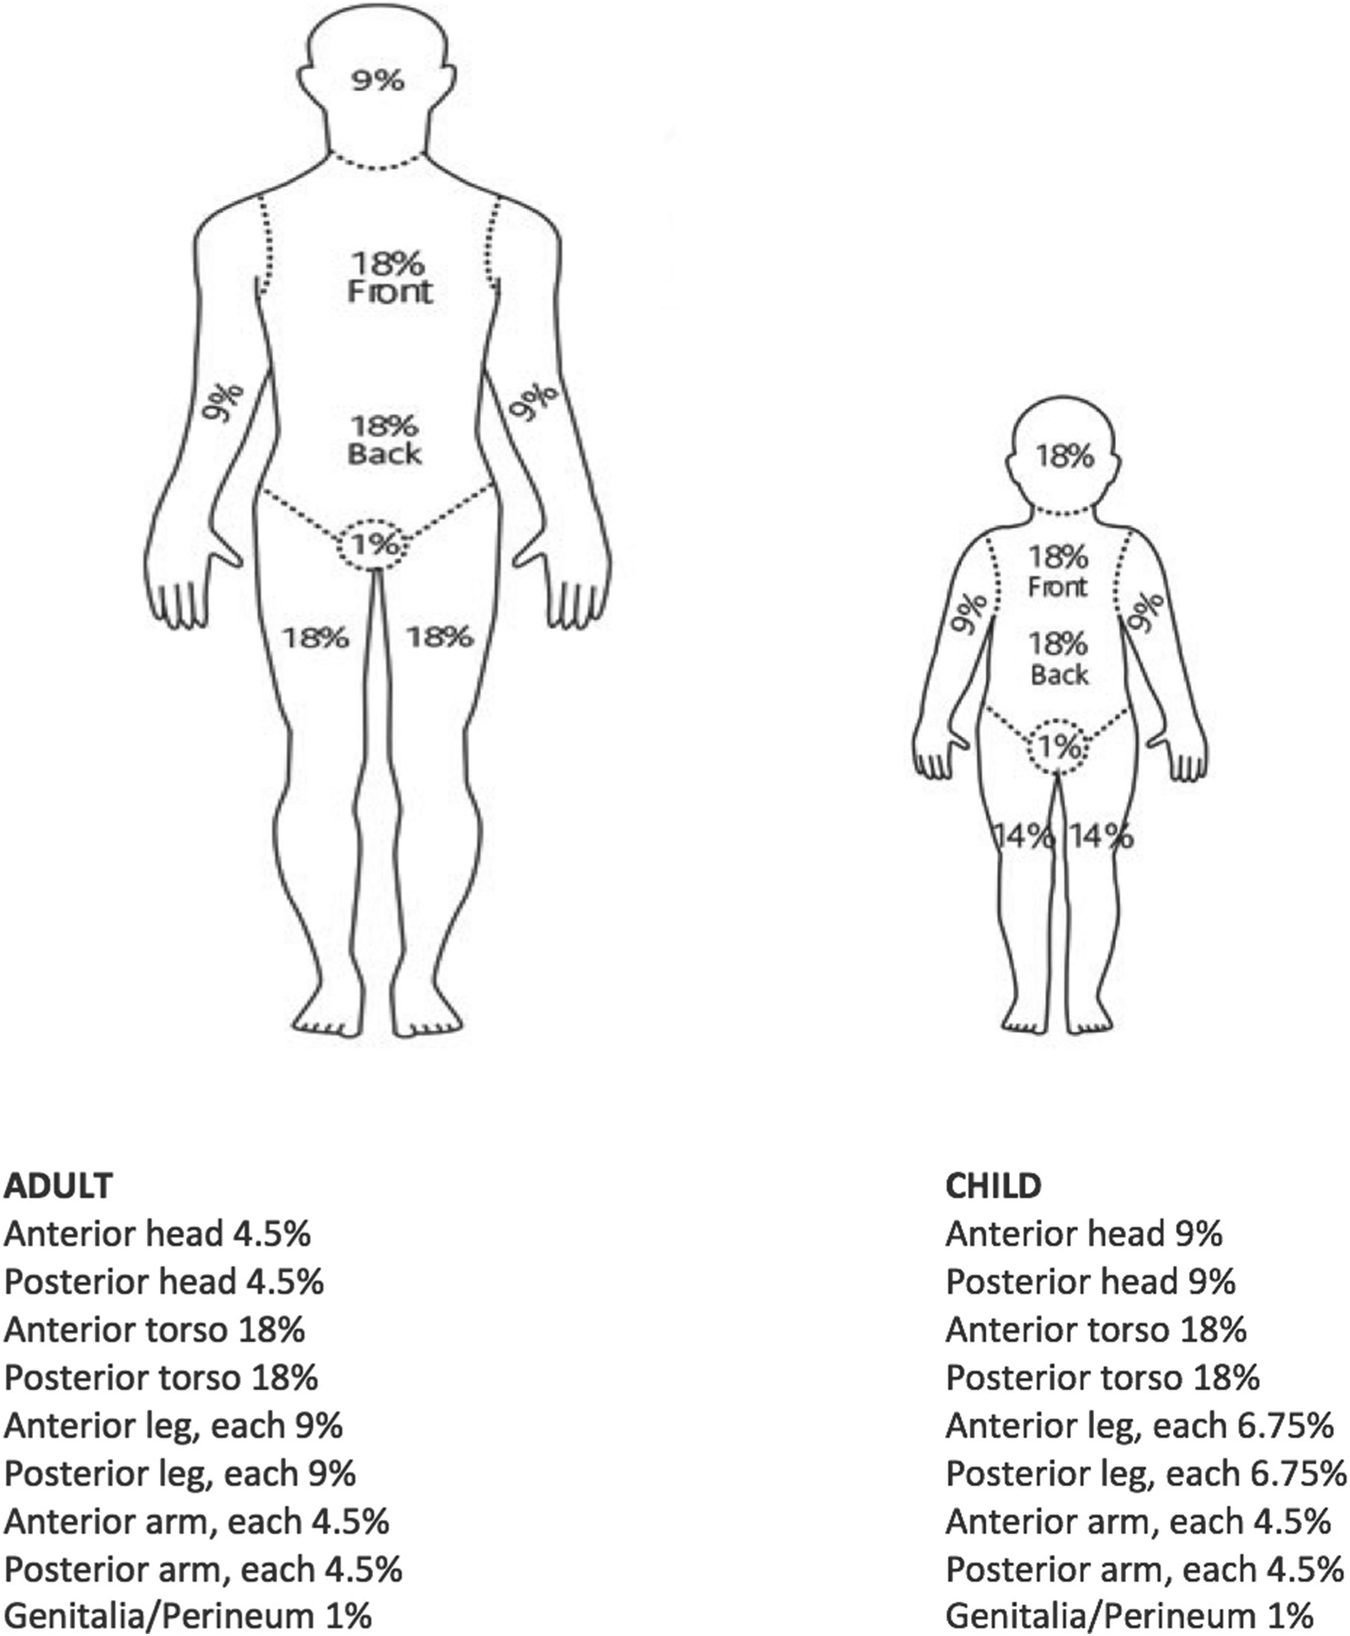 Body Part Injury Chart